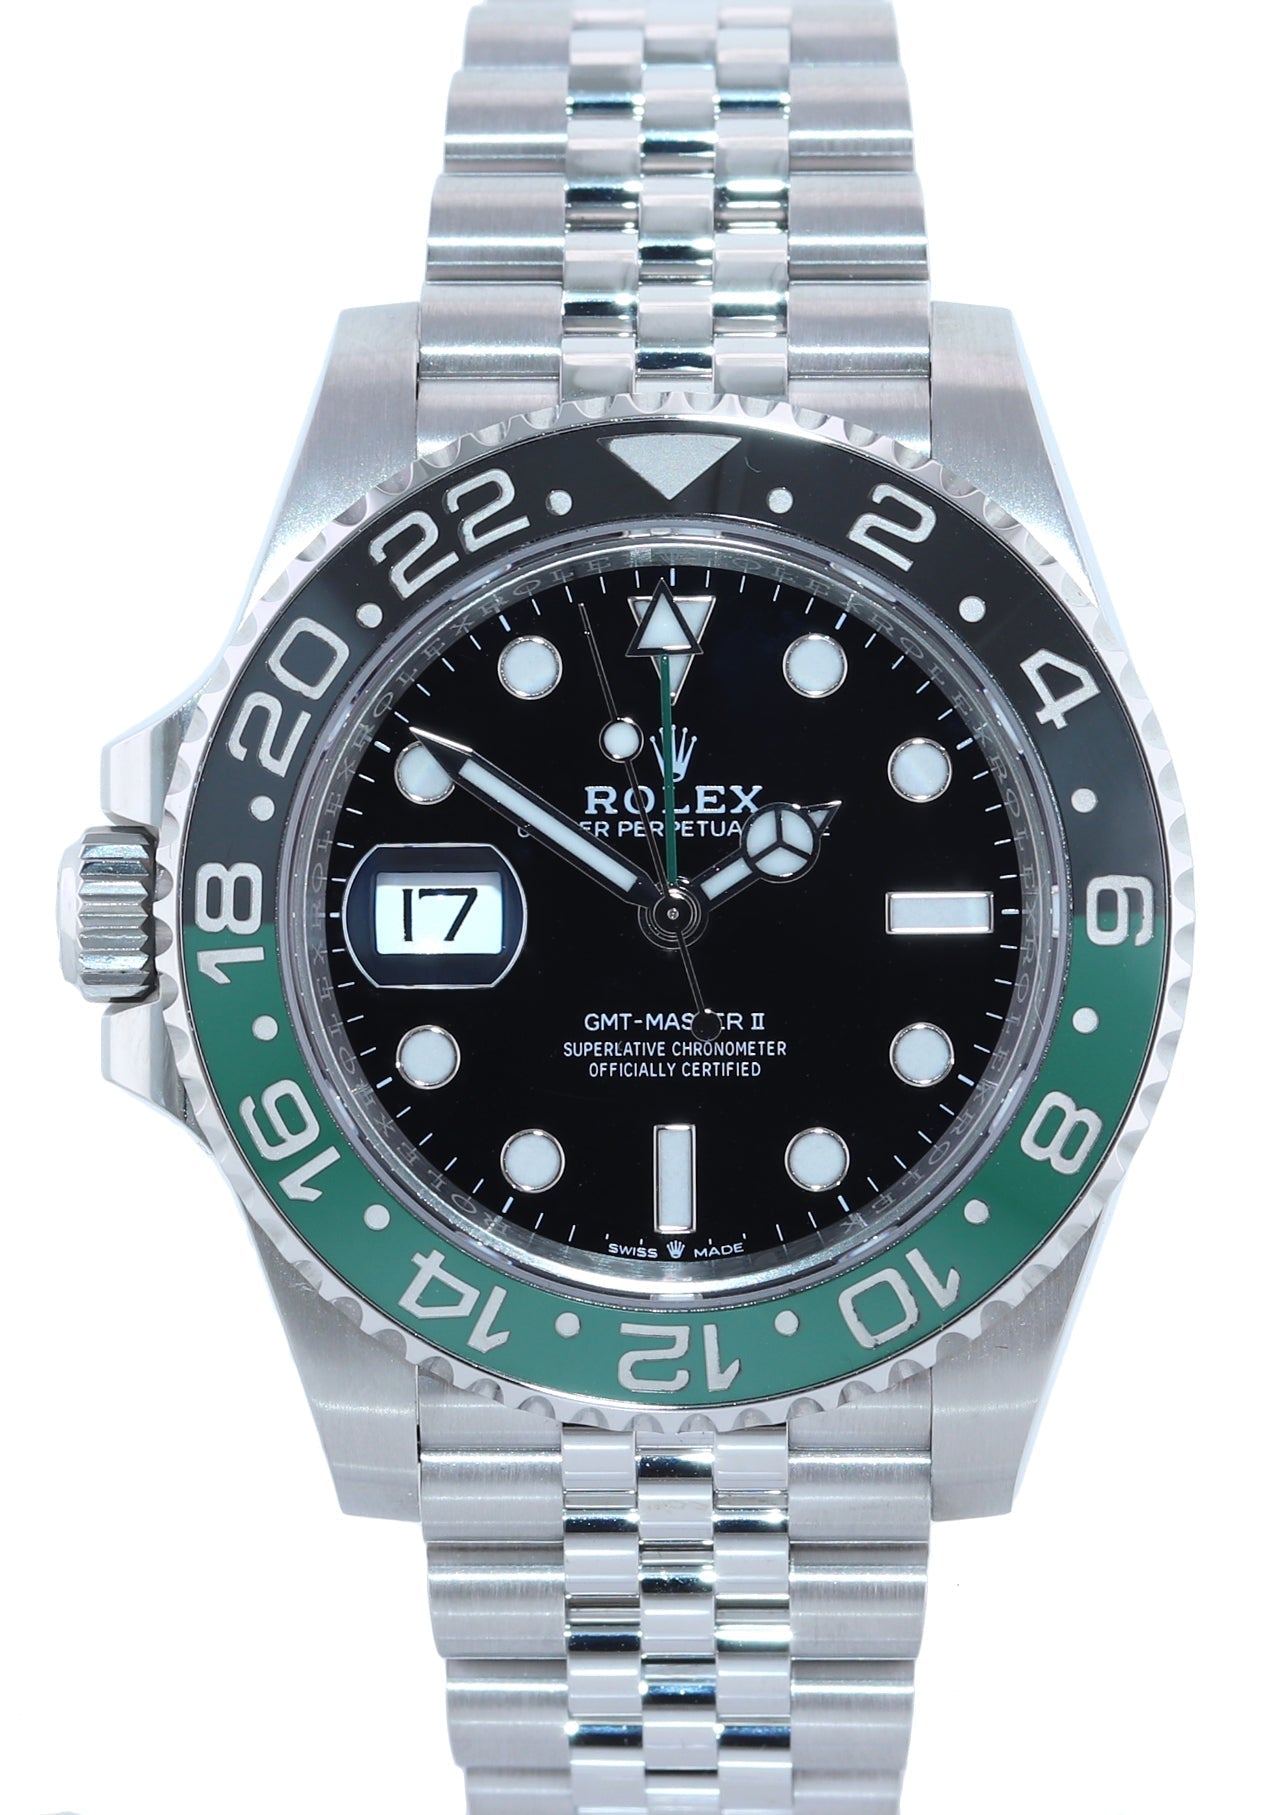 June 2022 PAPERS Rolex GMT-Master II SPRITE Green Black Jubilee Steel 126720 VTNR Watch